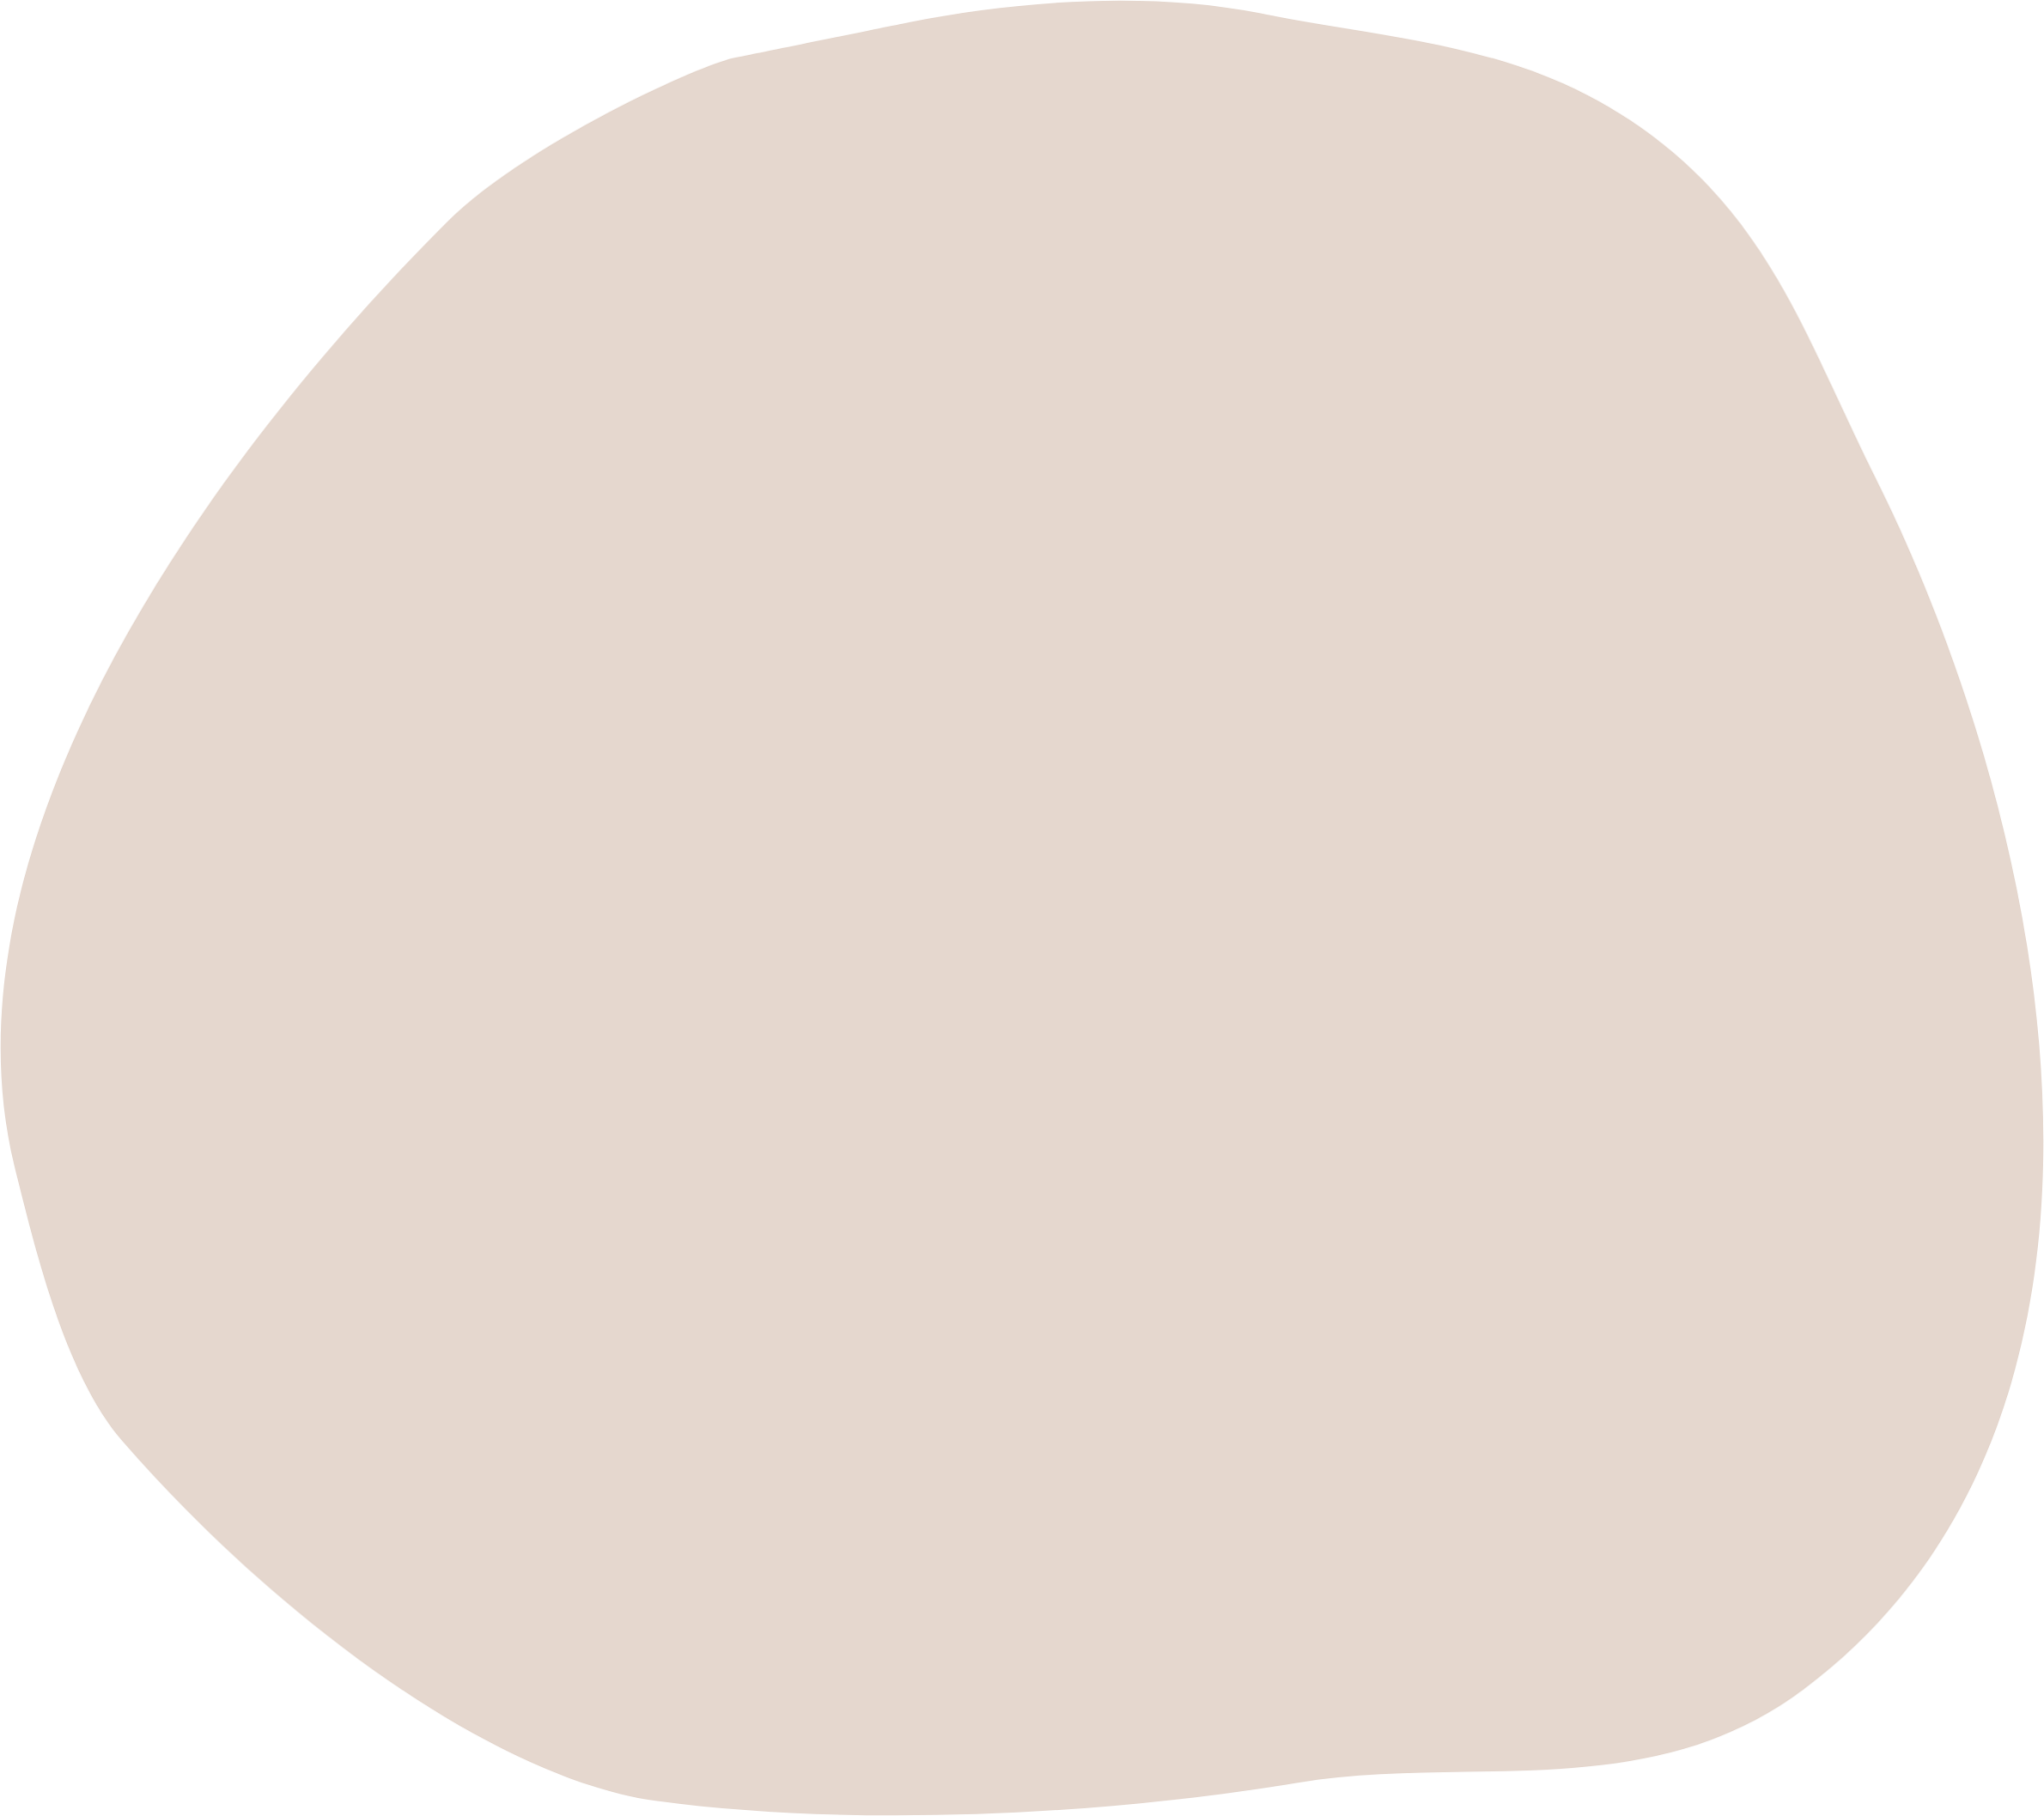 circle stone rock icon